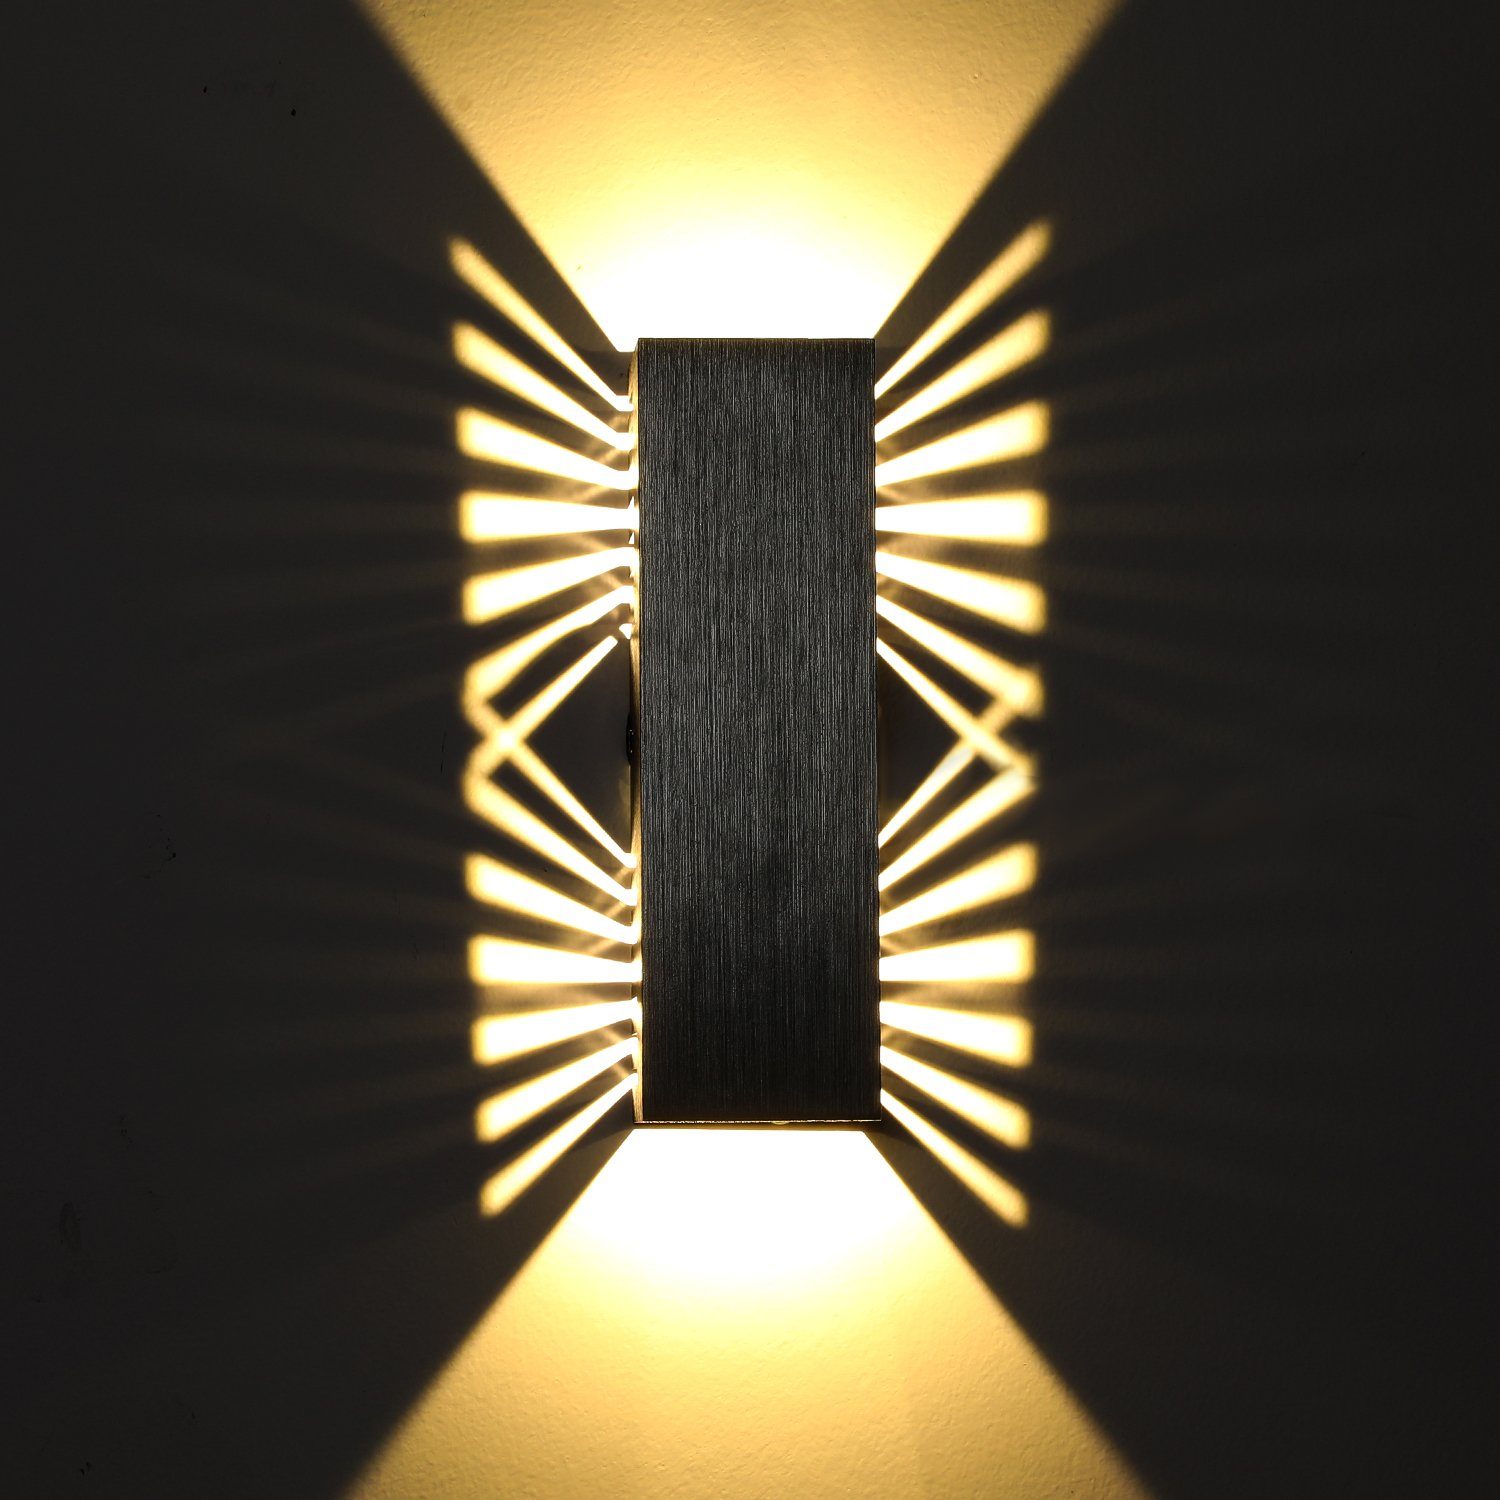 oyajia Wandleuchte 6W LED Wandleuchte indirekte Beleuchtung mit Schatteneffekt, Schwarz, LED fest integriert, Warmweiß, Up & Down Licht, Wandlampe aus Aluminium, Wohnzimmerbeleuchtung 1 Stück